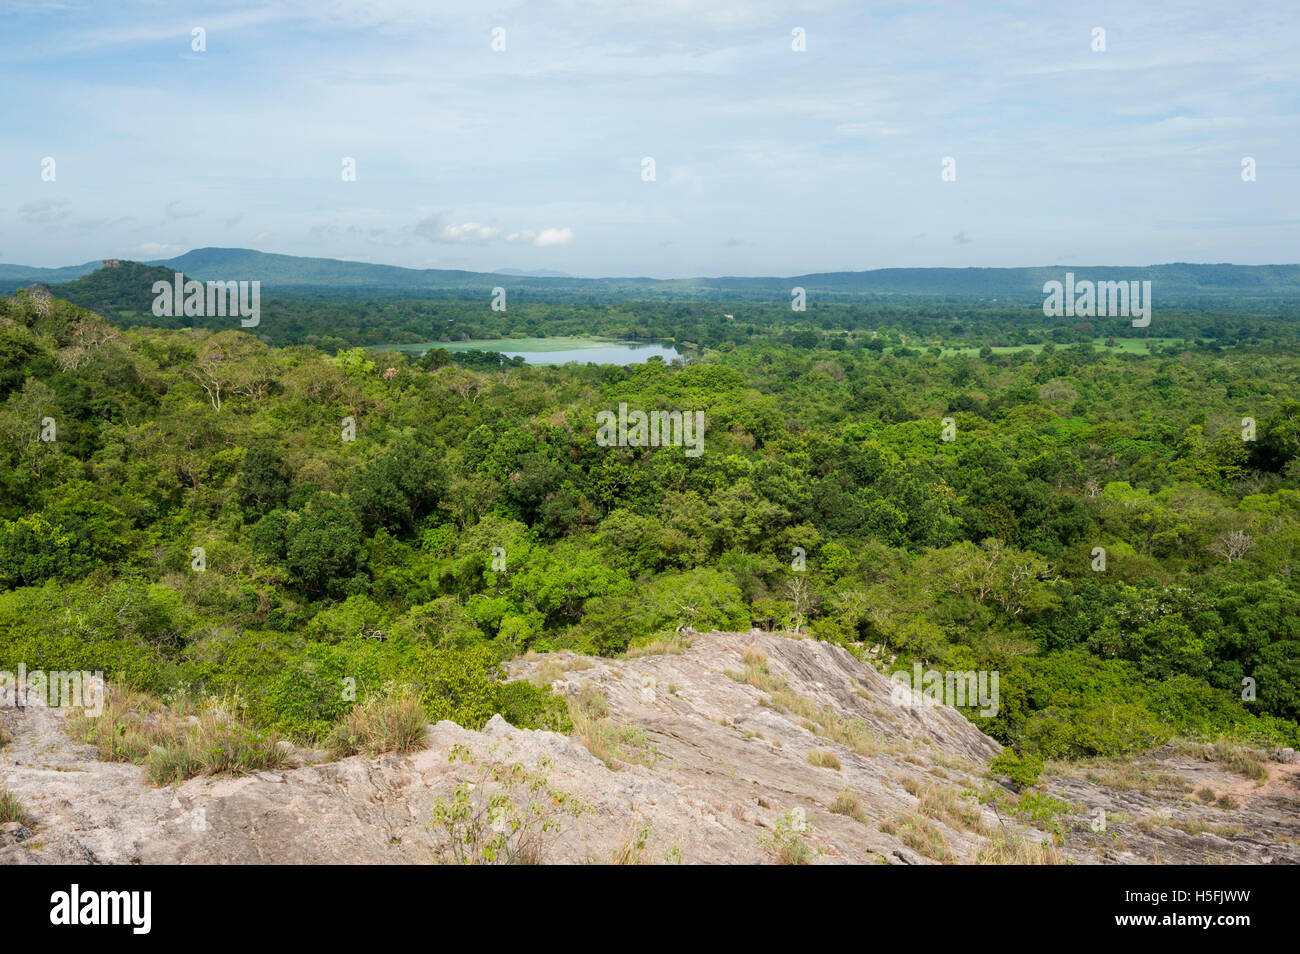 Rose quartz mountain range in Jathika Namal Uyana Forest Reserve, Sri Lanka Stock Photo